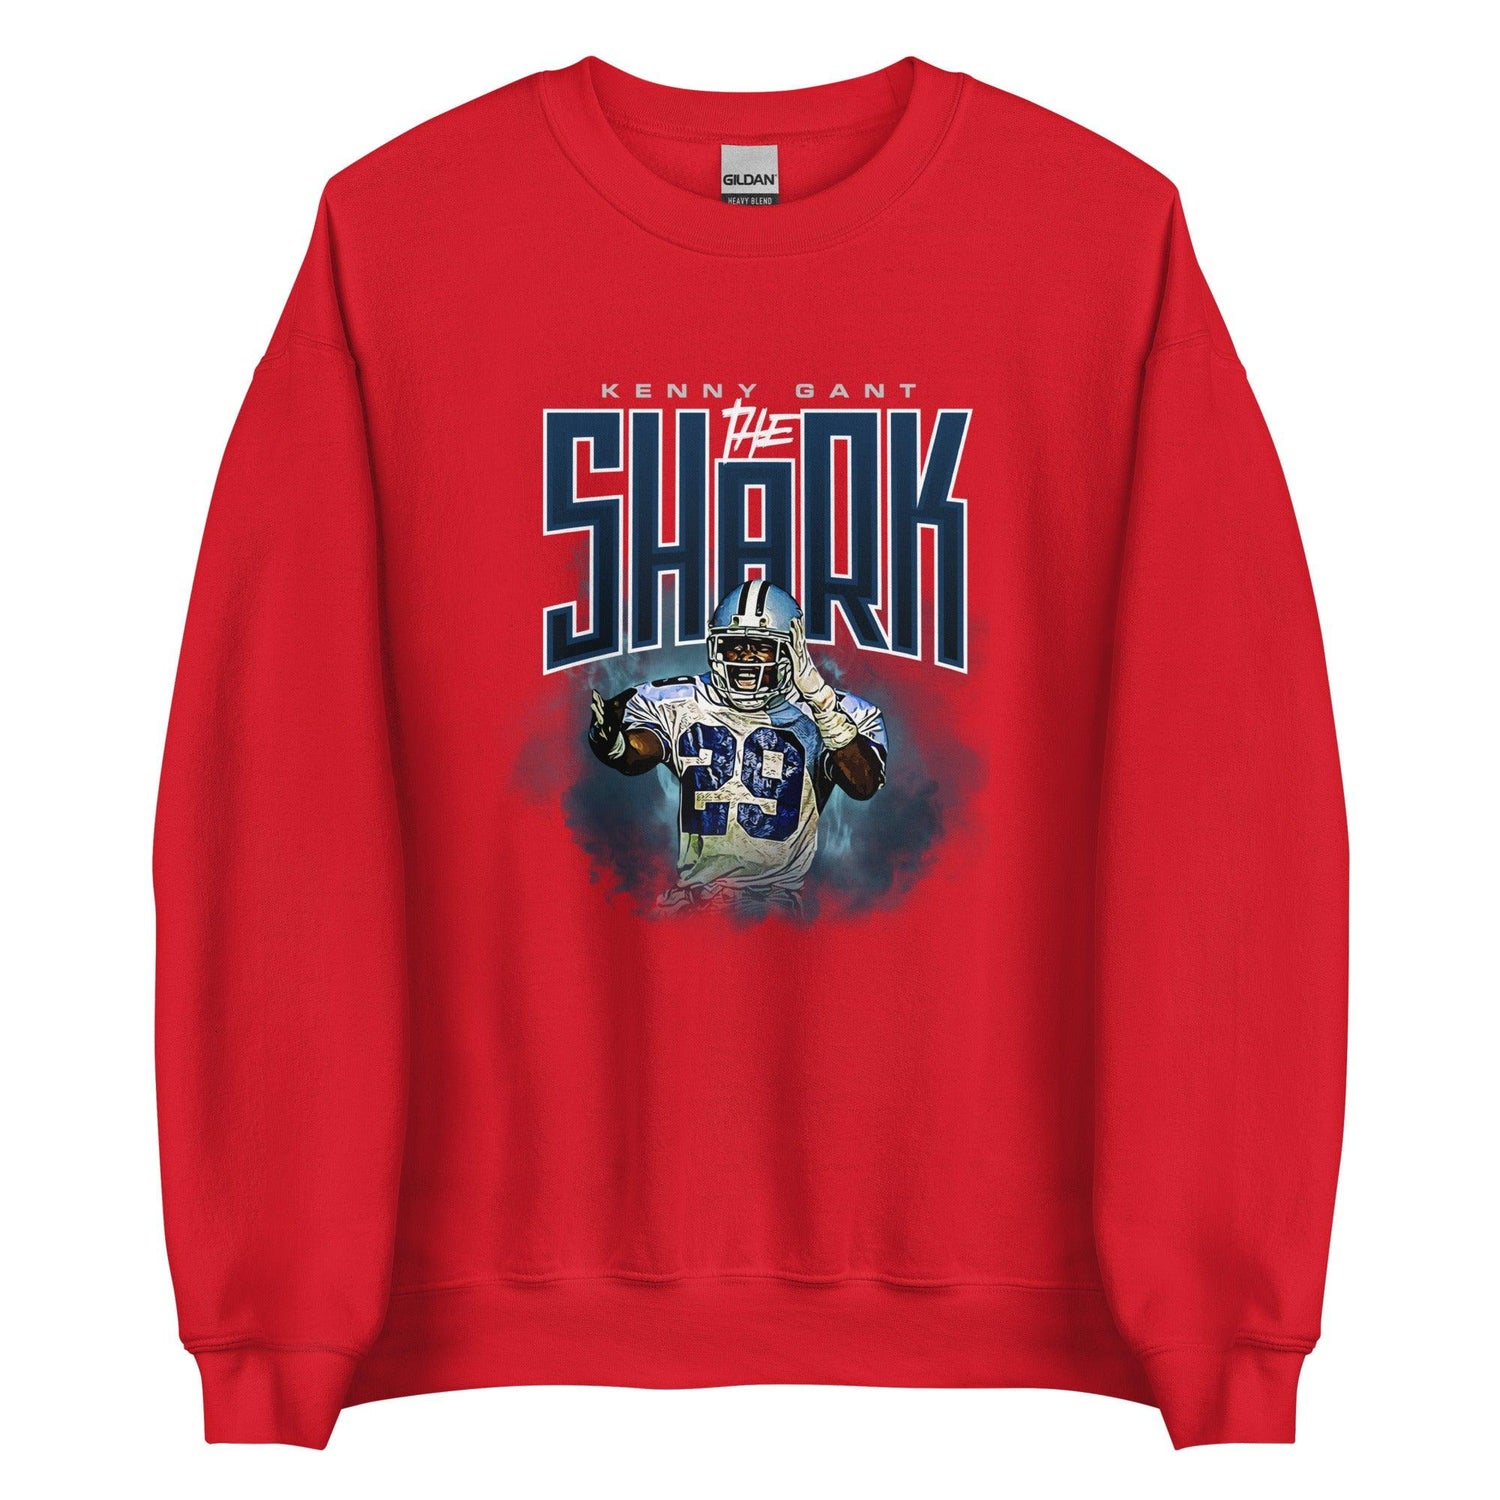 Kenny Gant "The Shark" Sweatshirt - Fan Arch